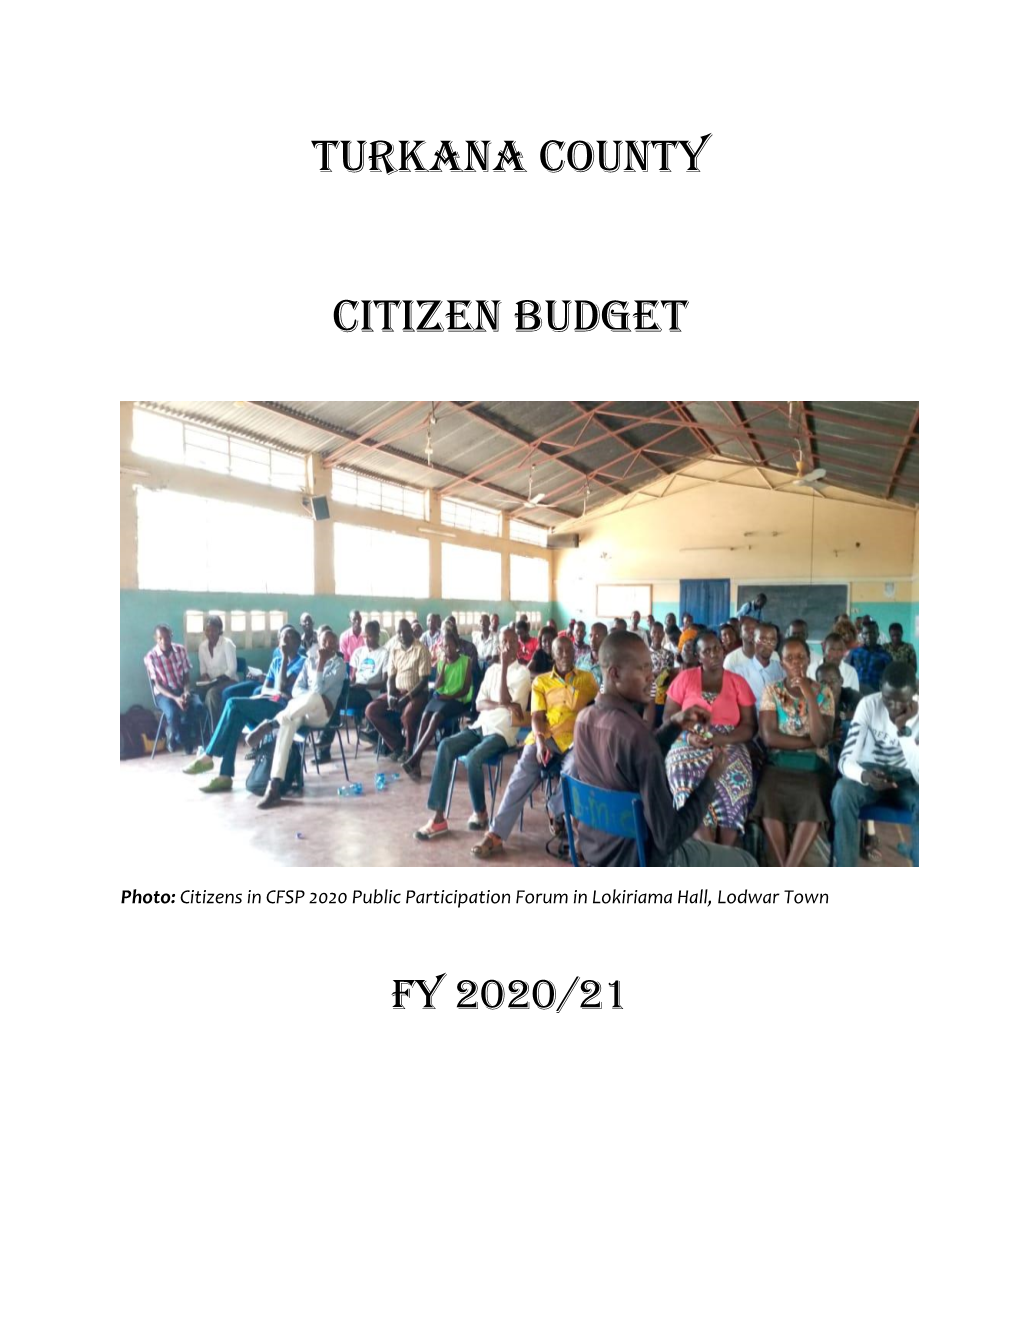 Turkana County Citizen Budget